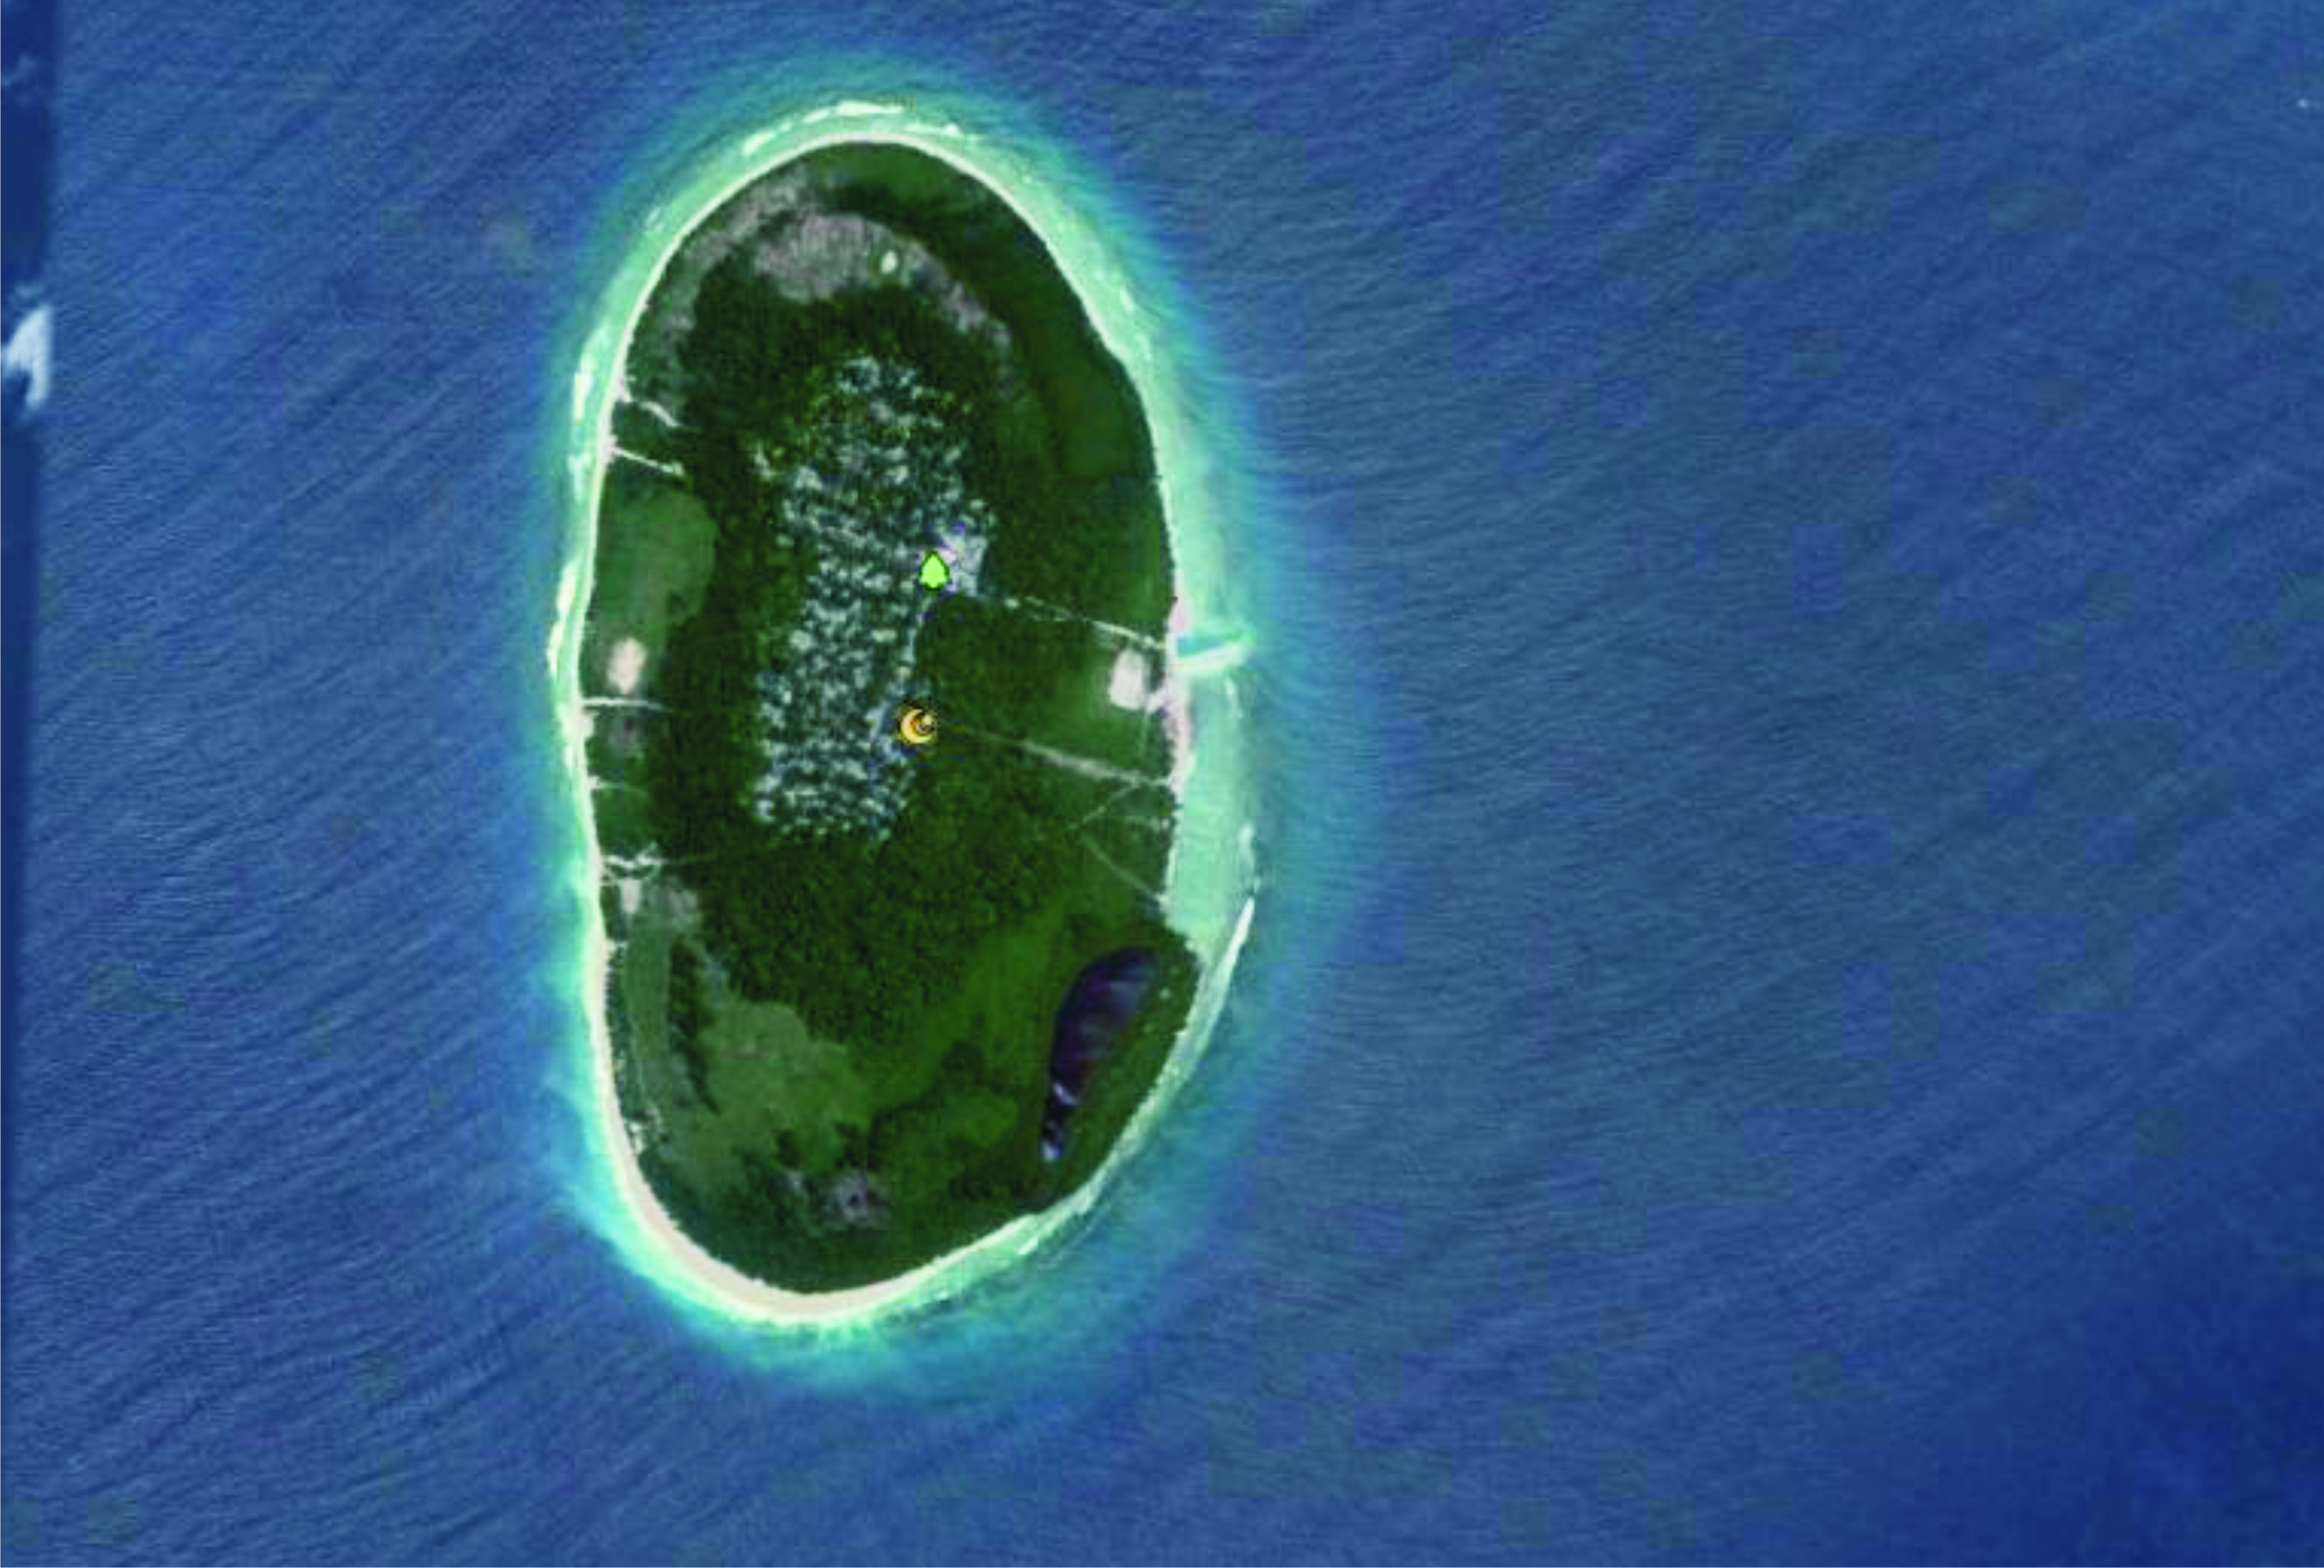 Thiladhunmathi Dhekunuburi (Haa Dhaalu Atoll)